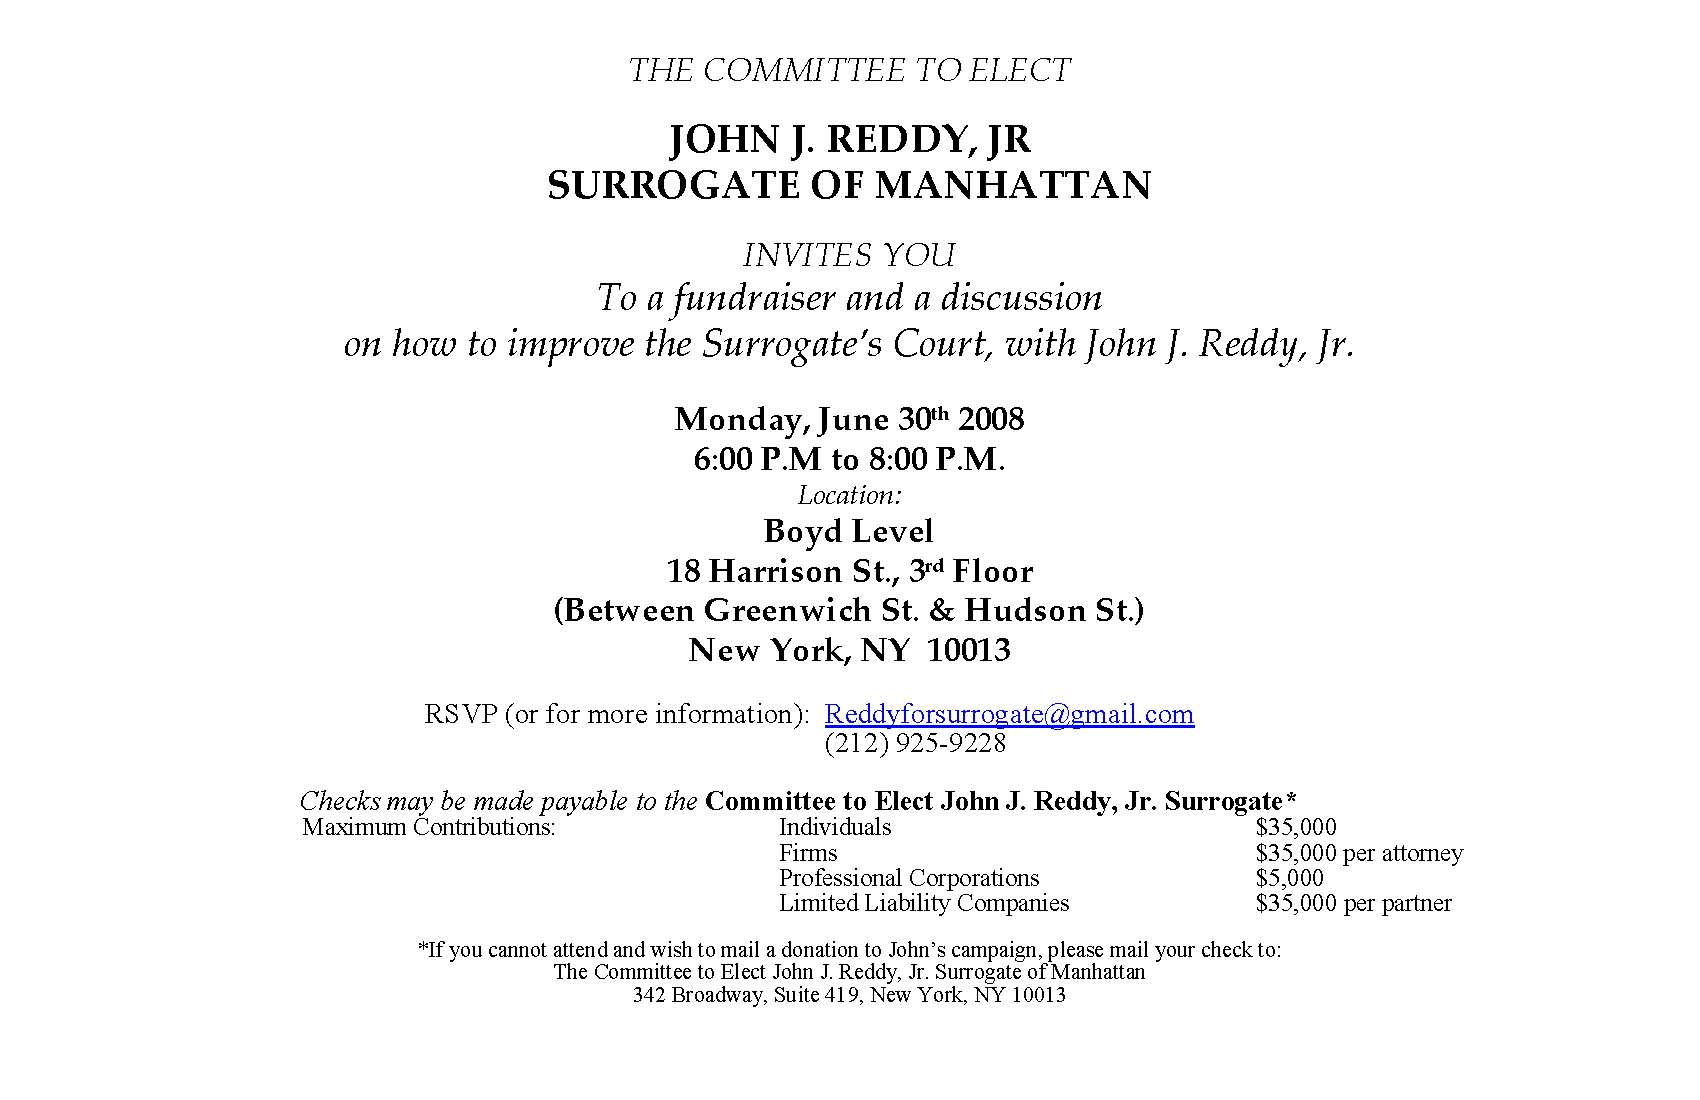 Invitation to Reddy Fundraiser 06 30 08_Page_1.jpg